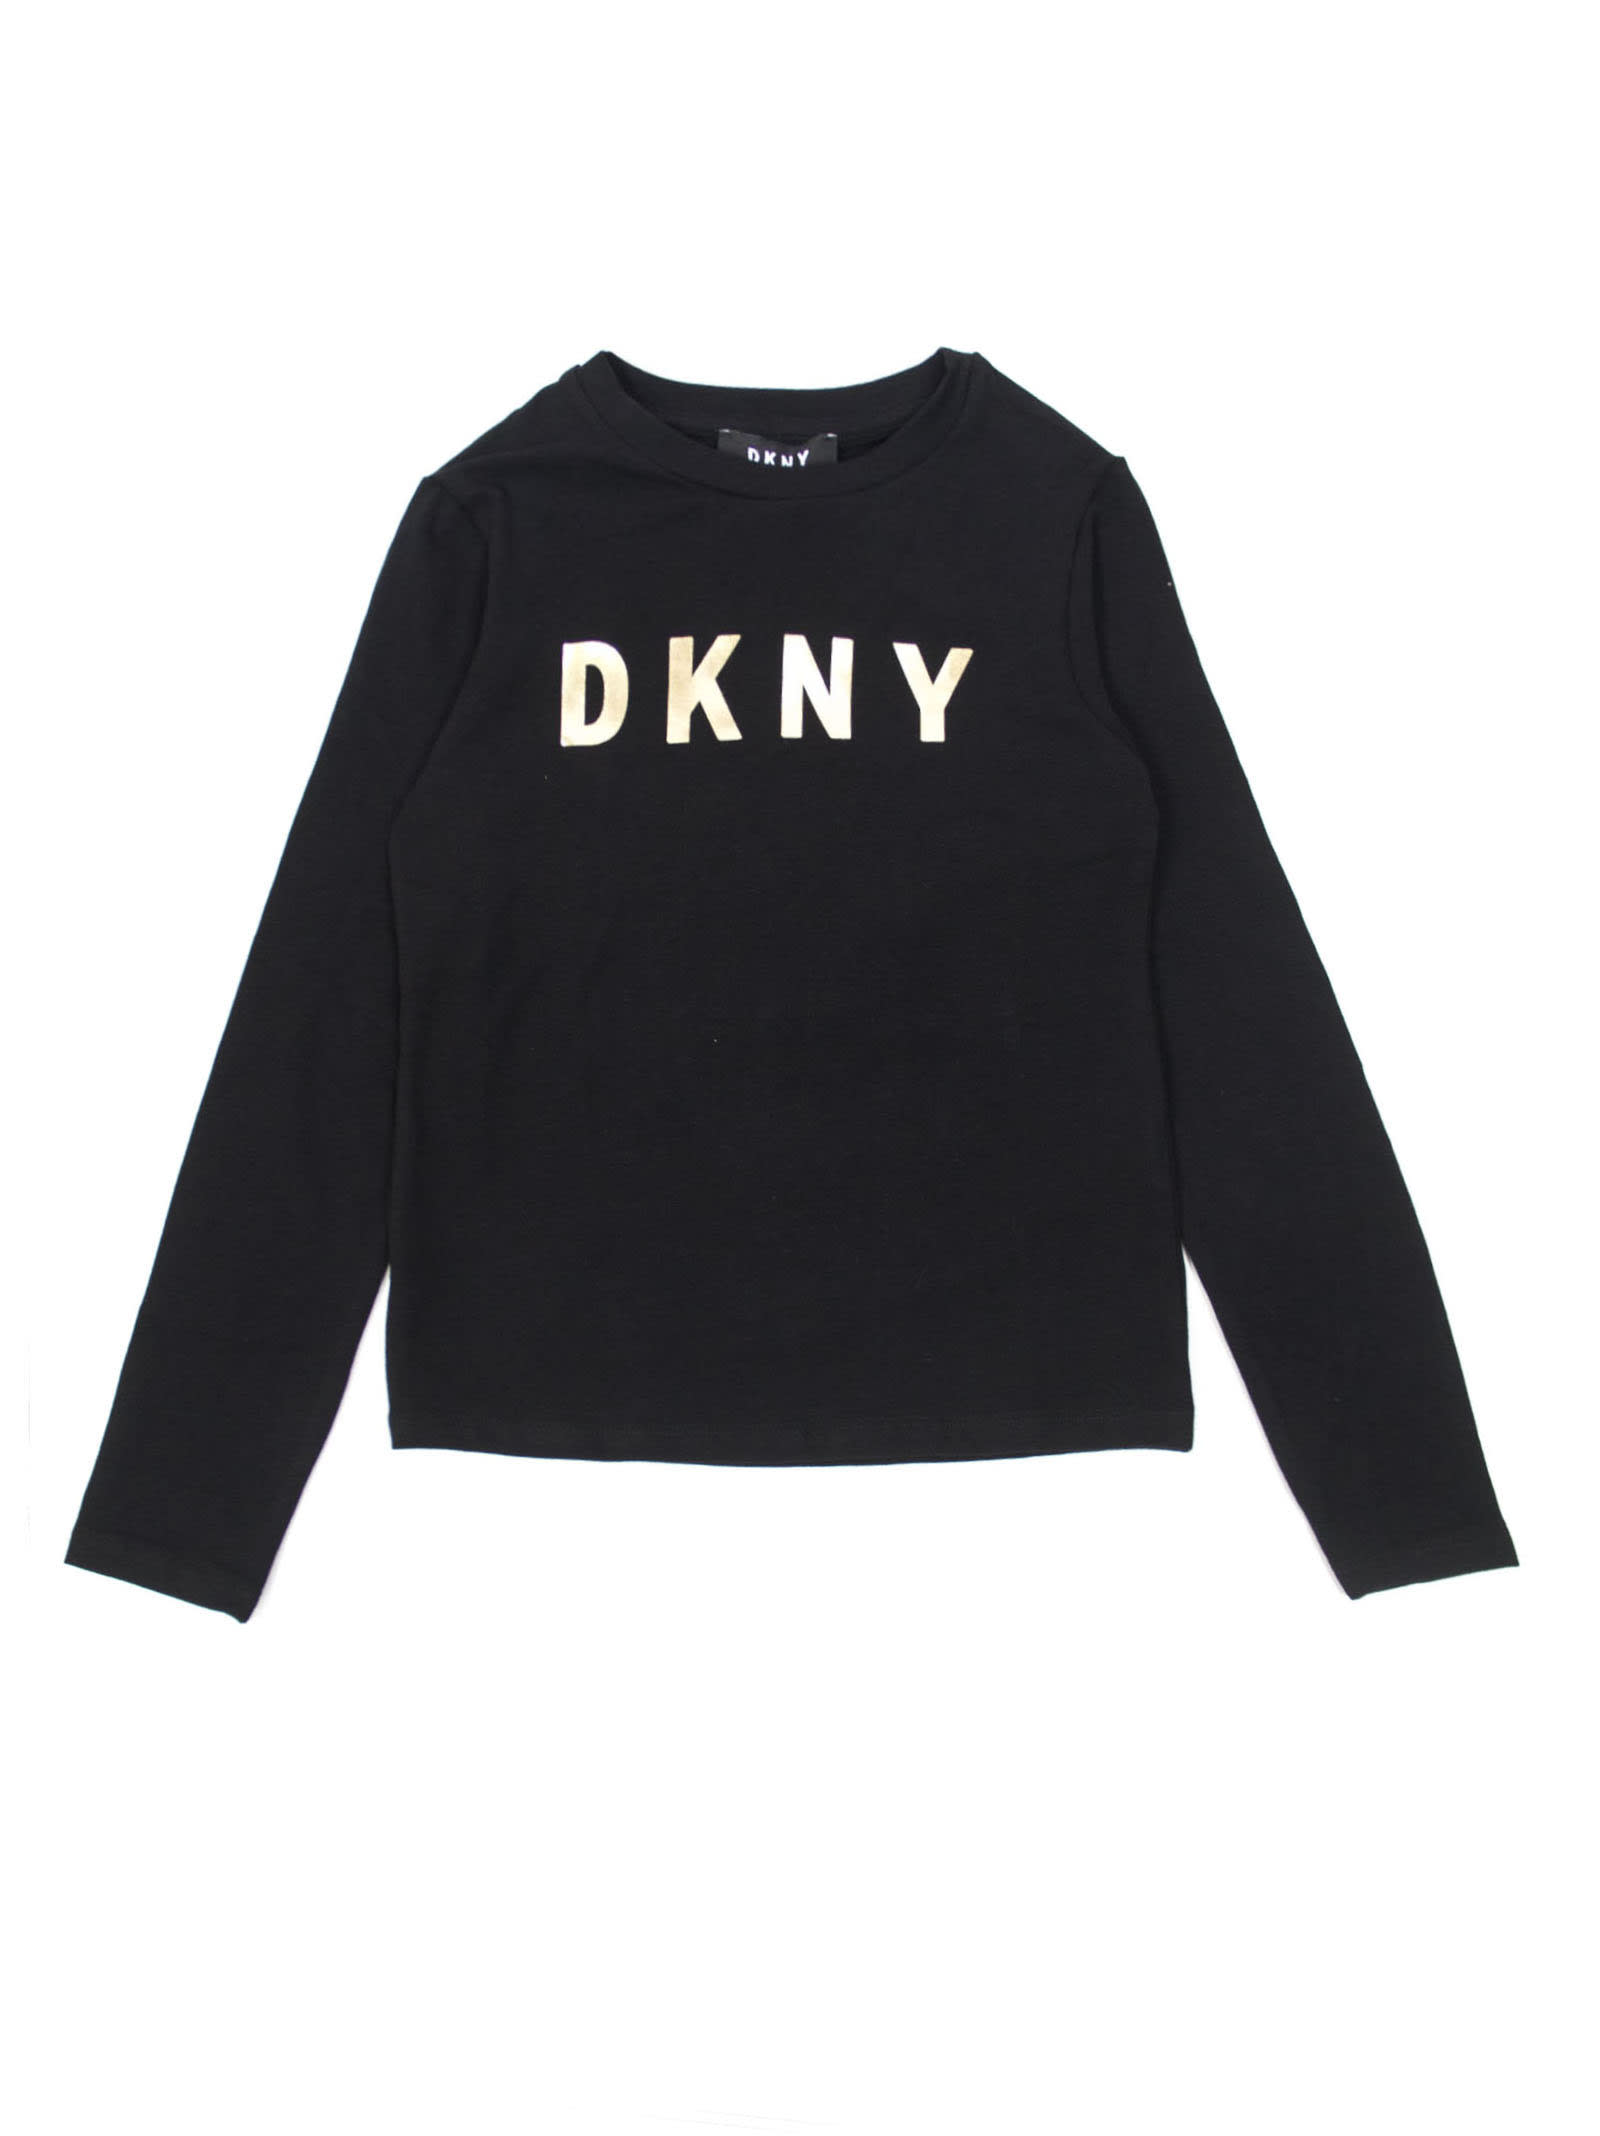 DKNY Black Cotton Jersey T-shirt